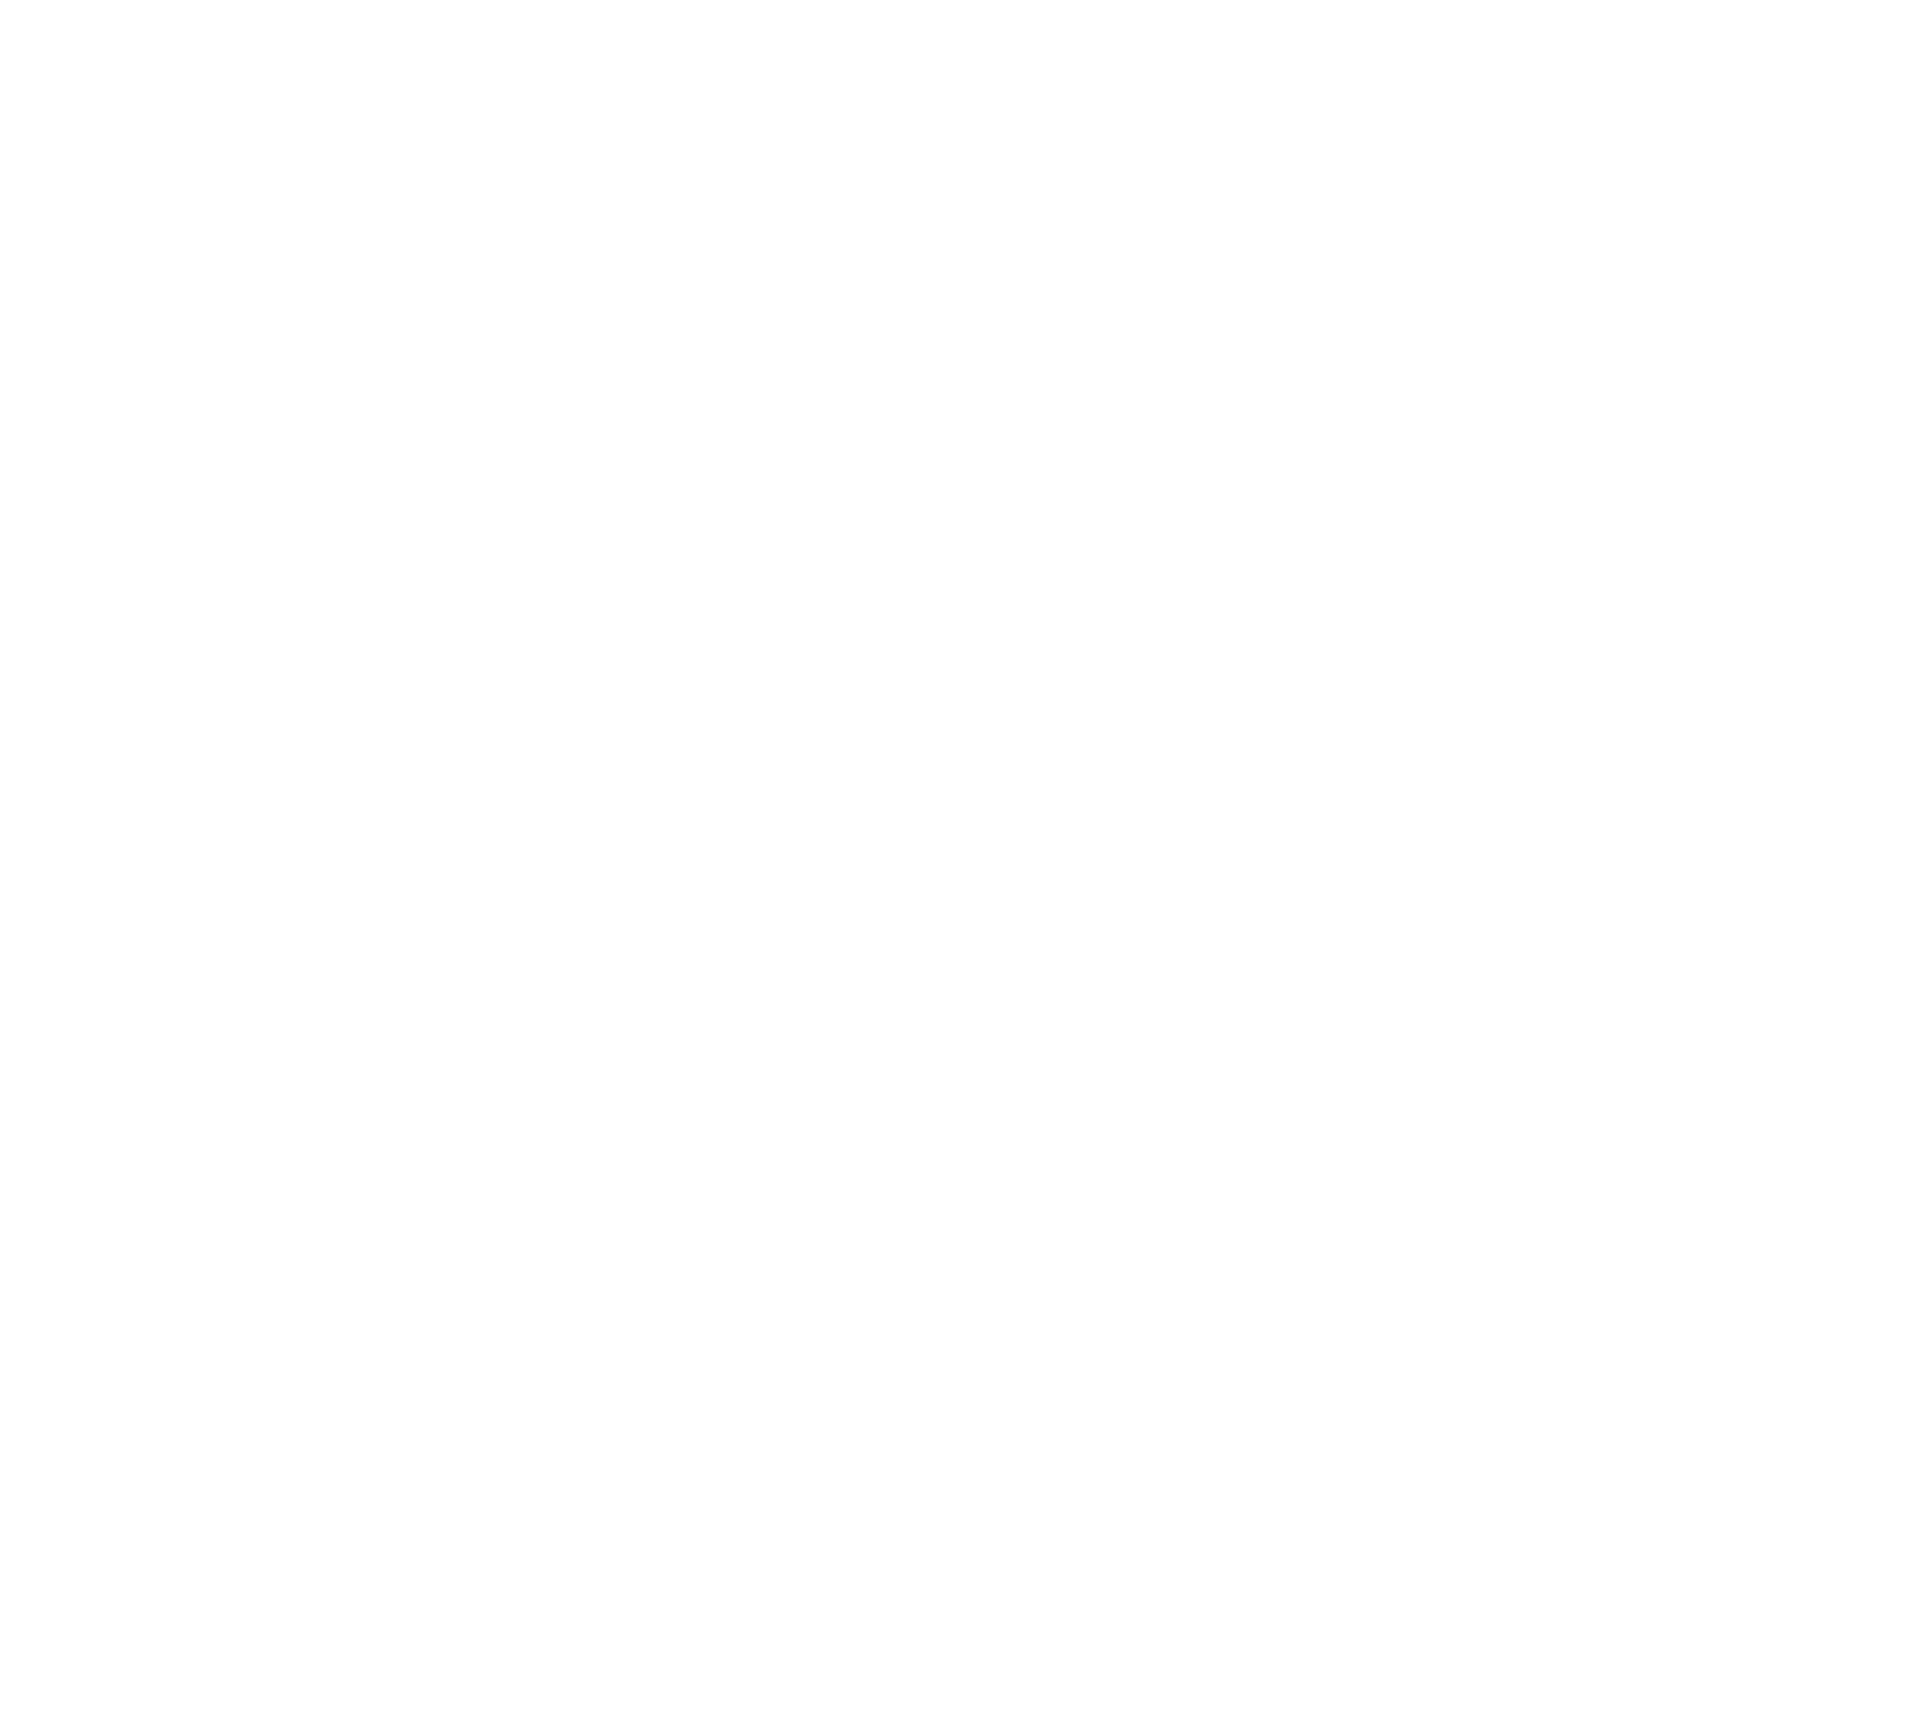 Cedar Road Studios